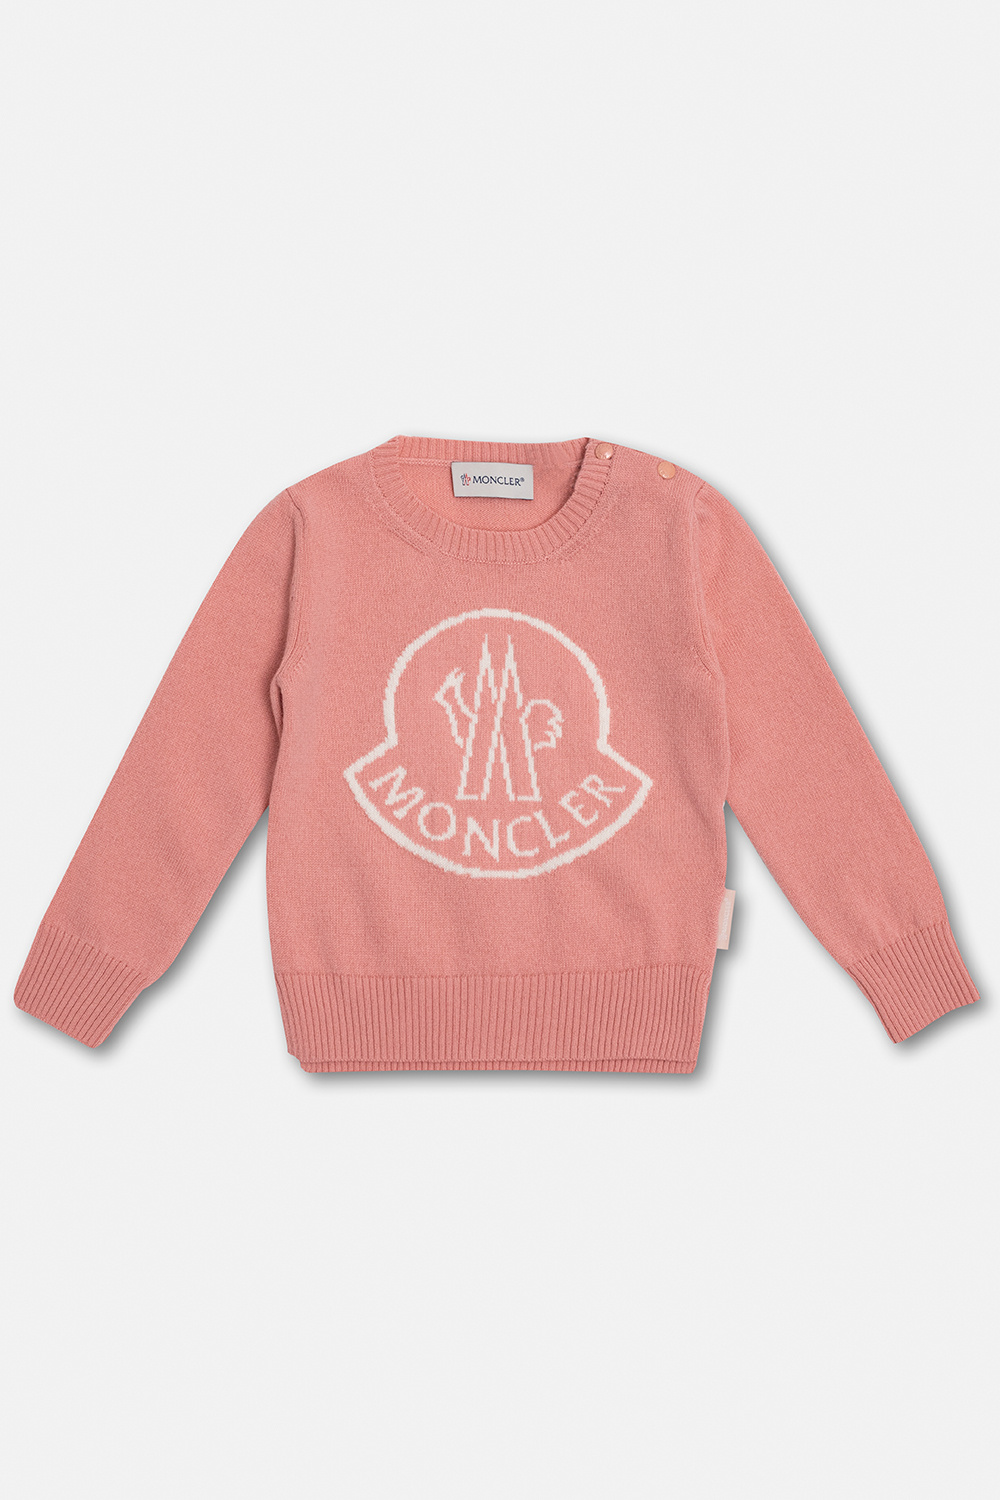 Moncler Enfant mastermind sweater with logo